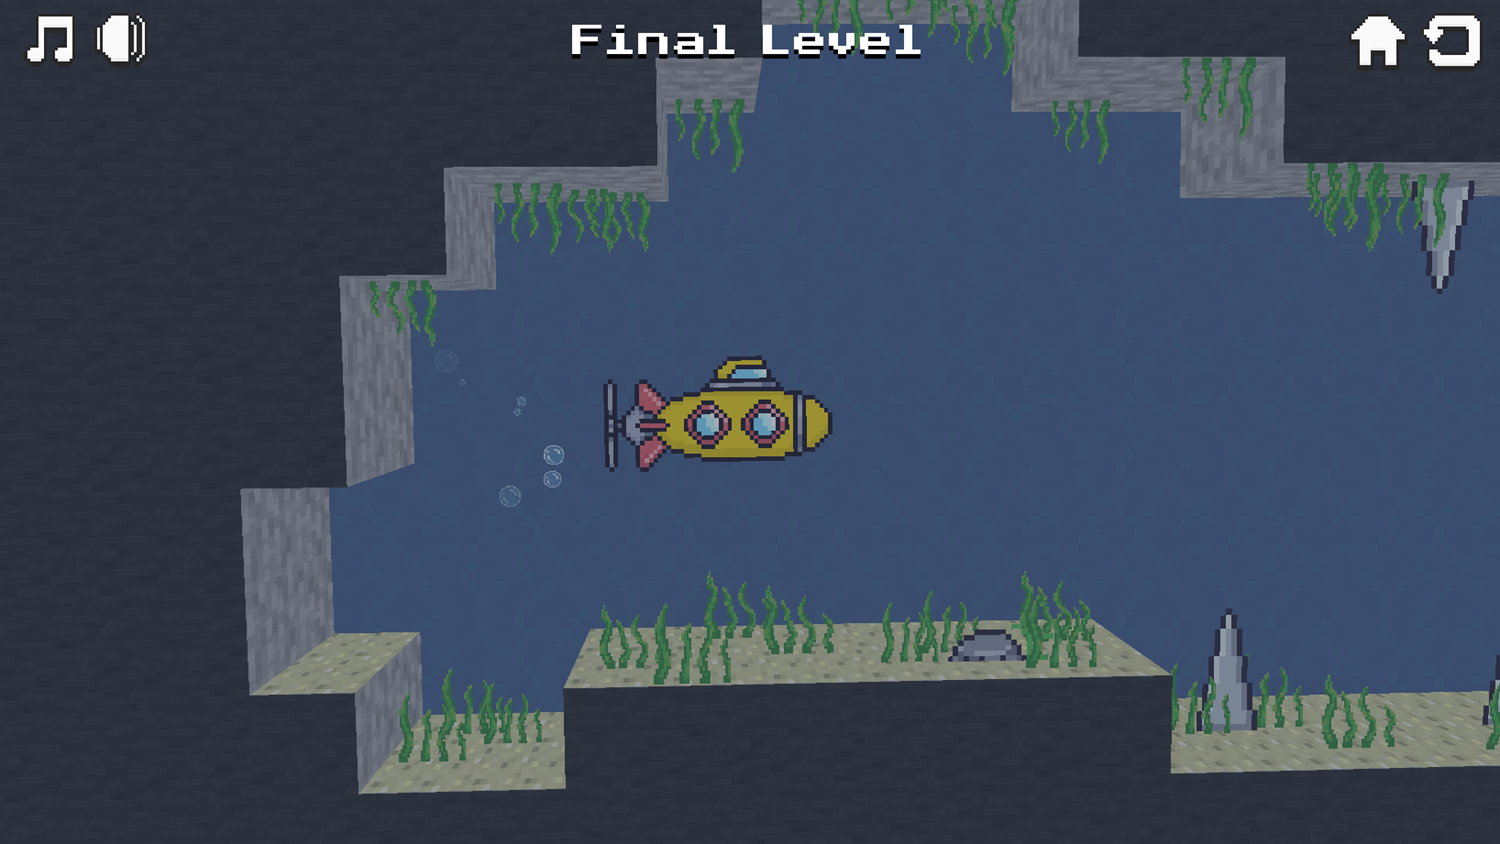 Submerged Escape Game Final Level Screenshot.